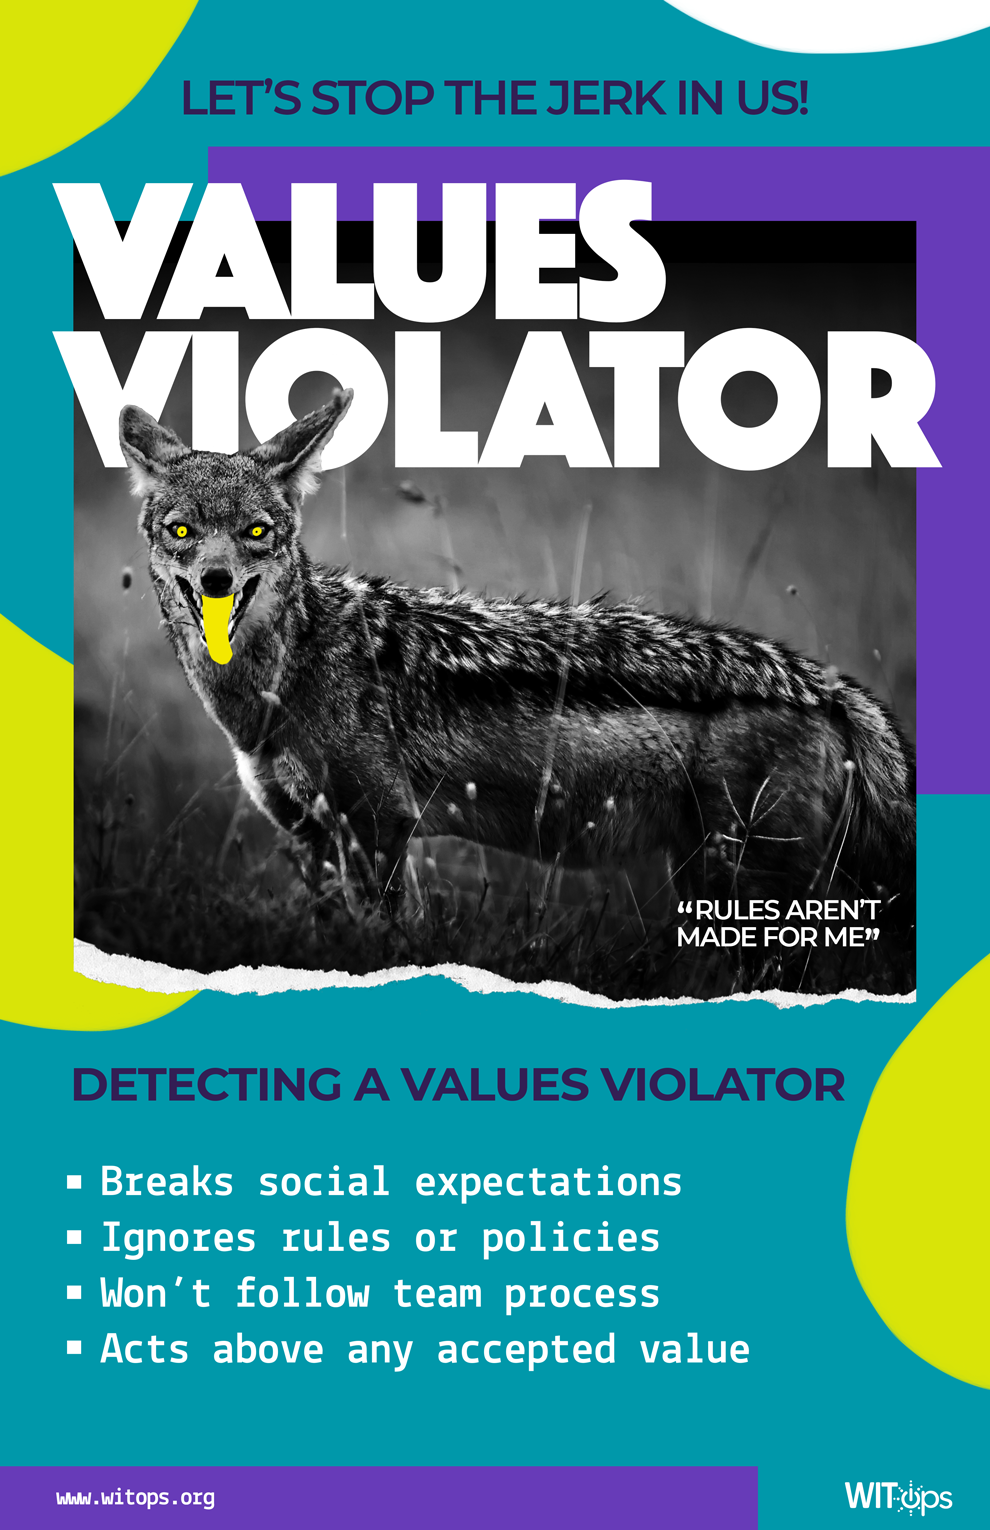 The Values Violator